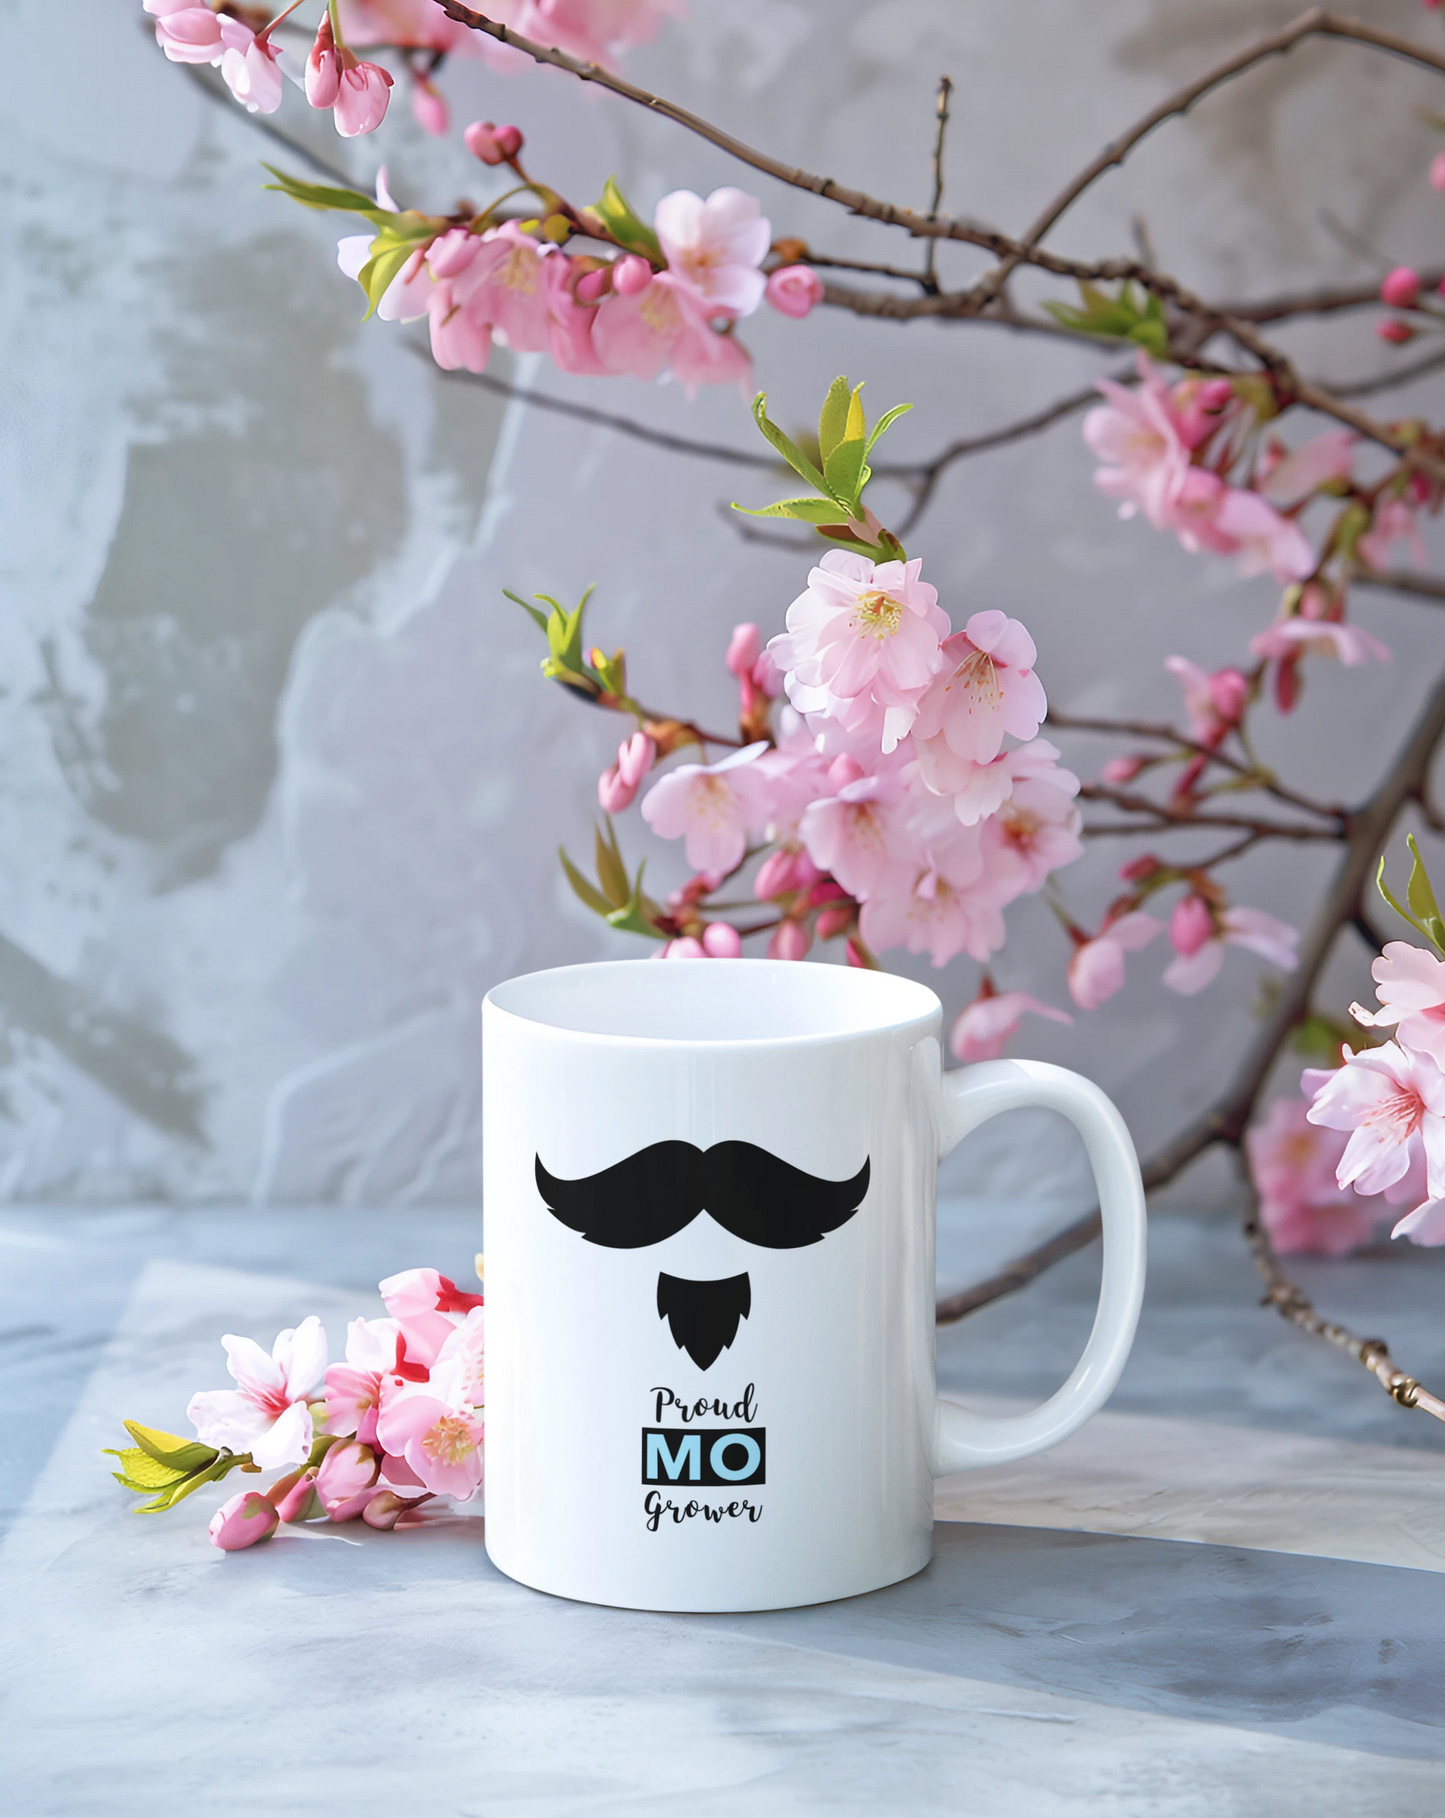 Proud Mo Grower Printed White Coffee Mug